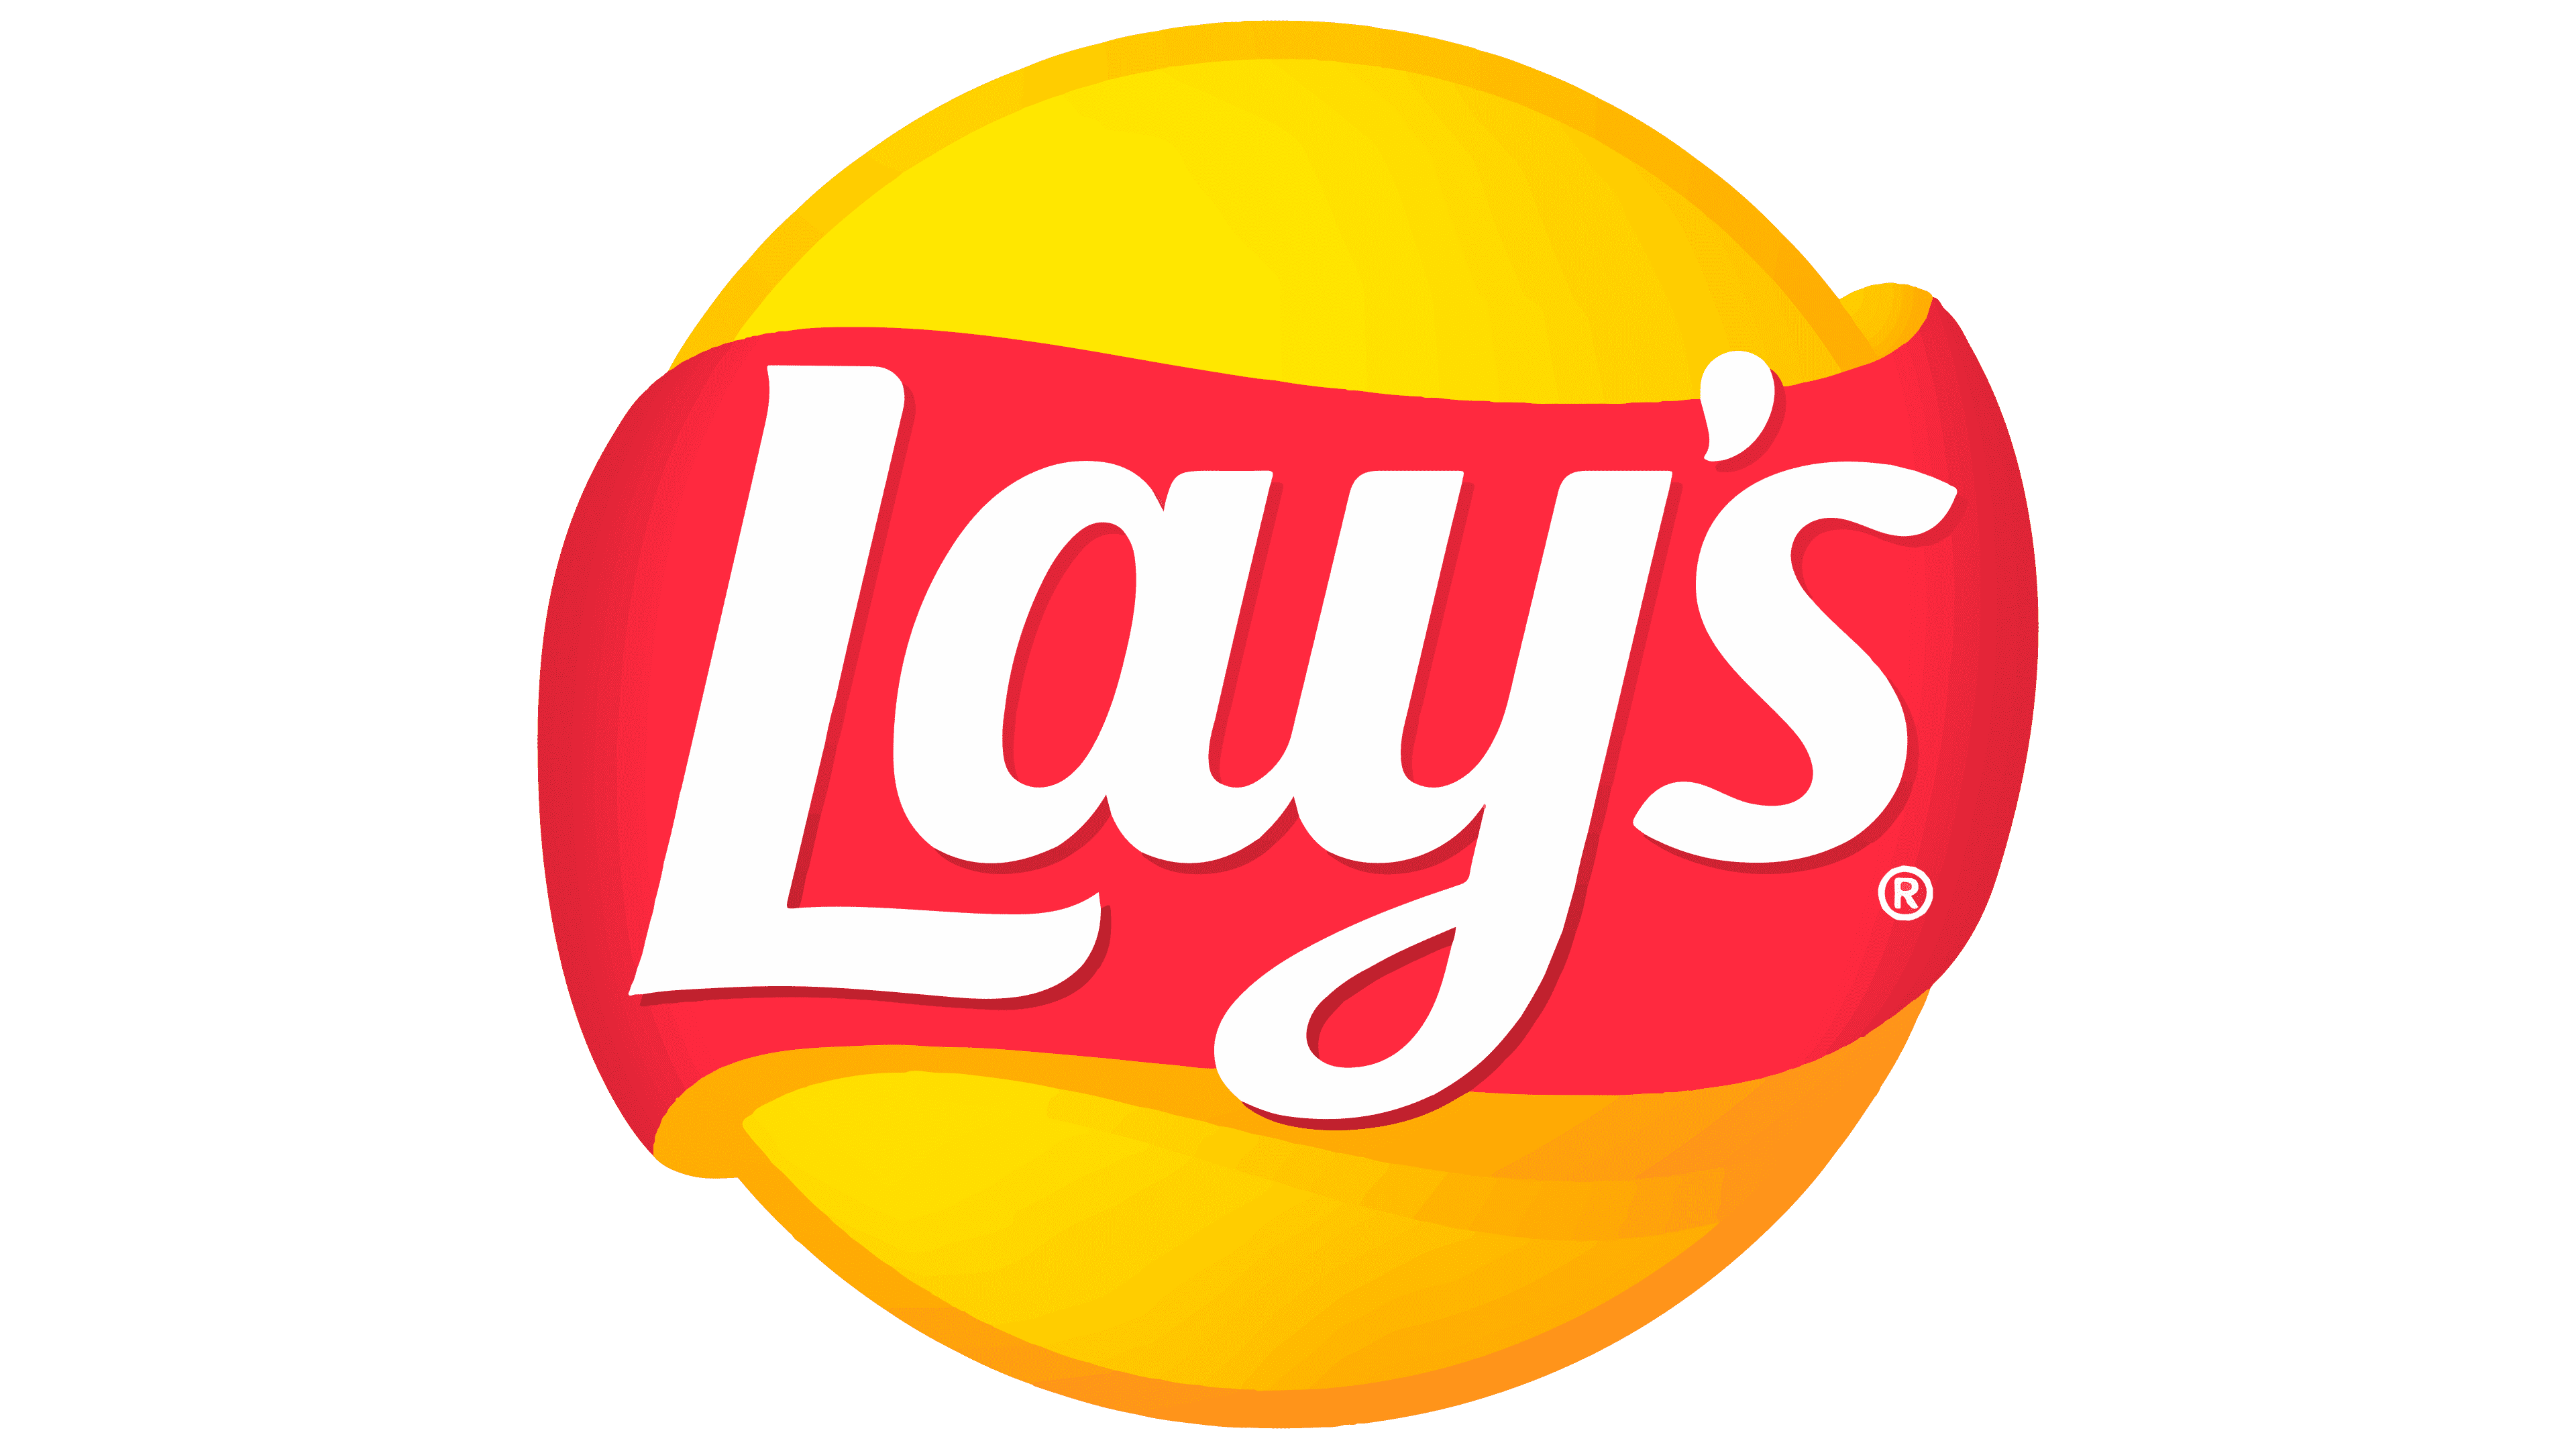 Lay's Brand Logo